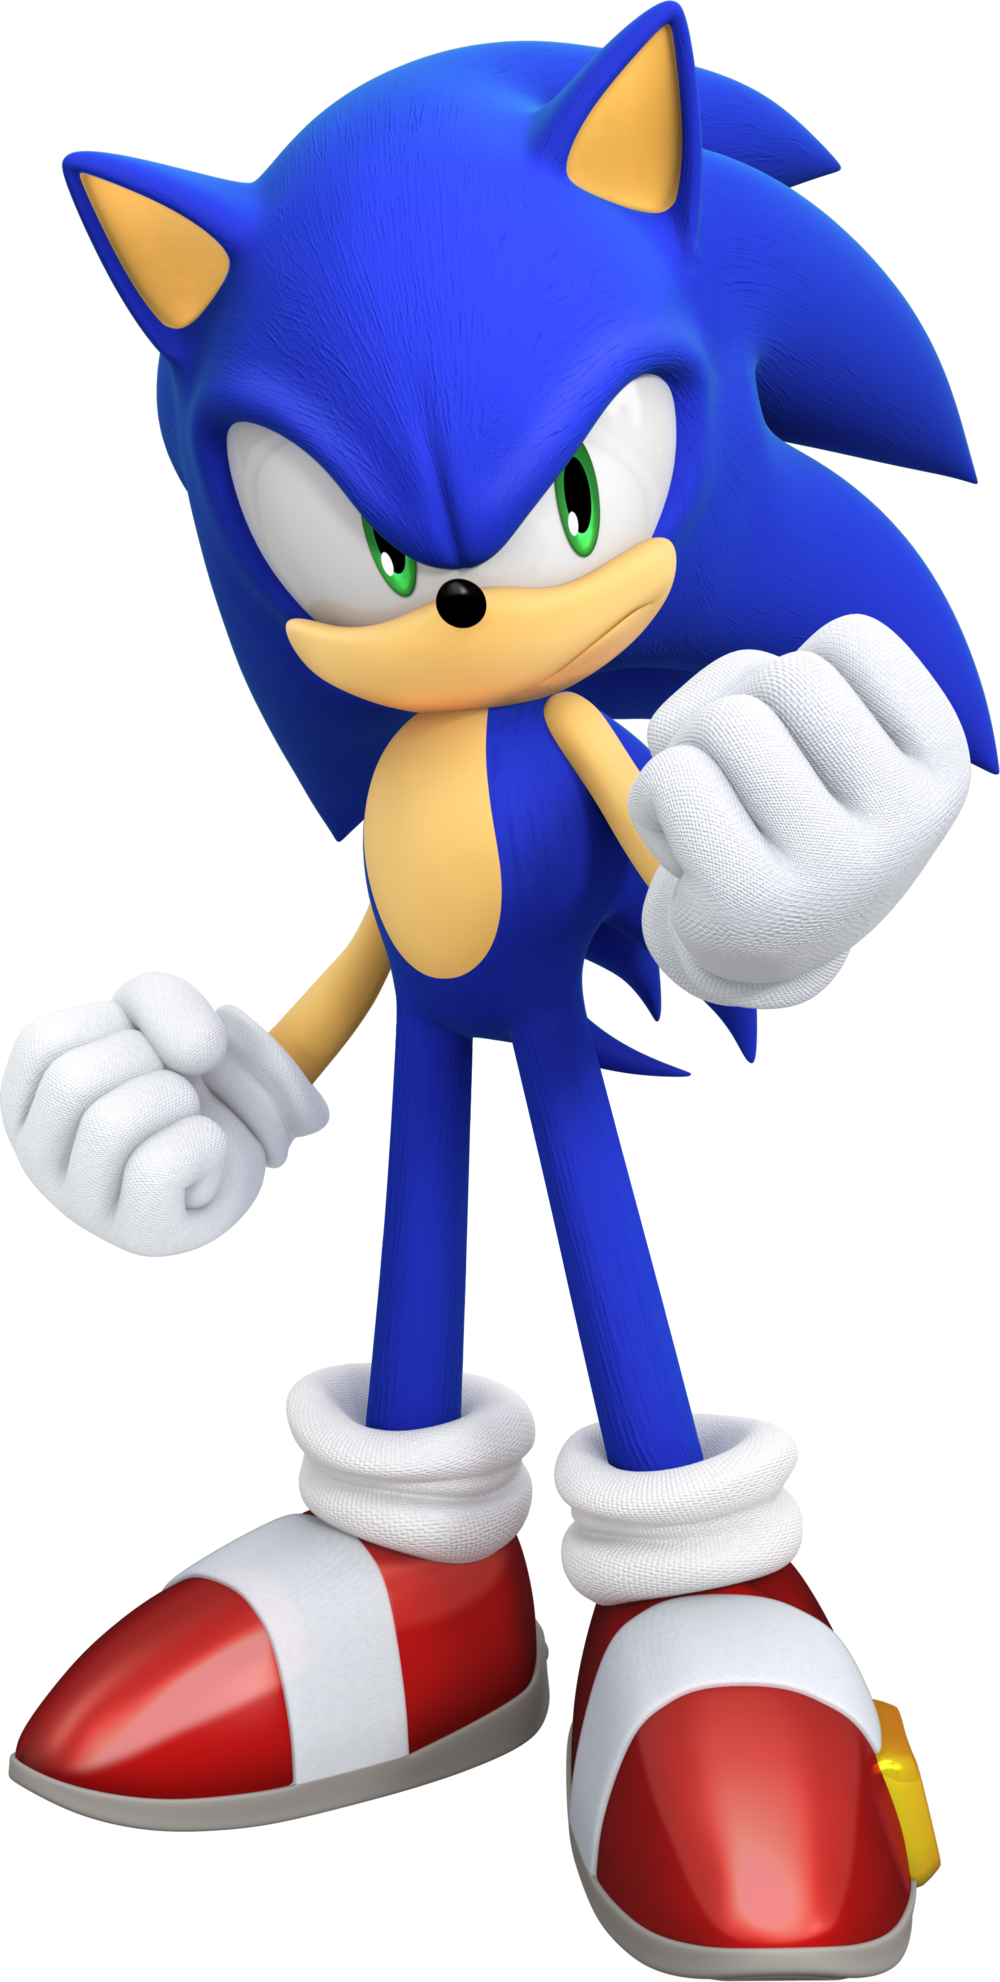 Sonic Animation - SONIC THE HEDGEHOG BATTLE 360° VR- SFM Animation (Sonic  Animation) 